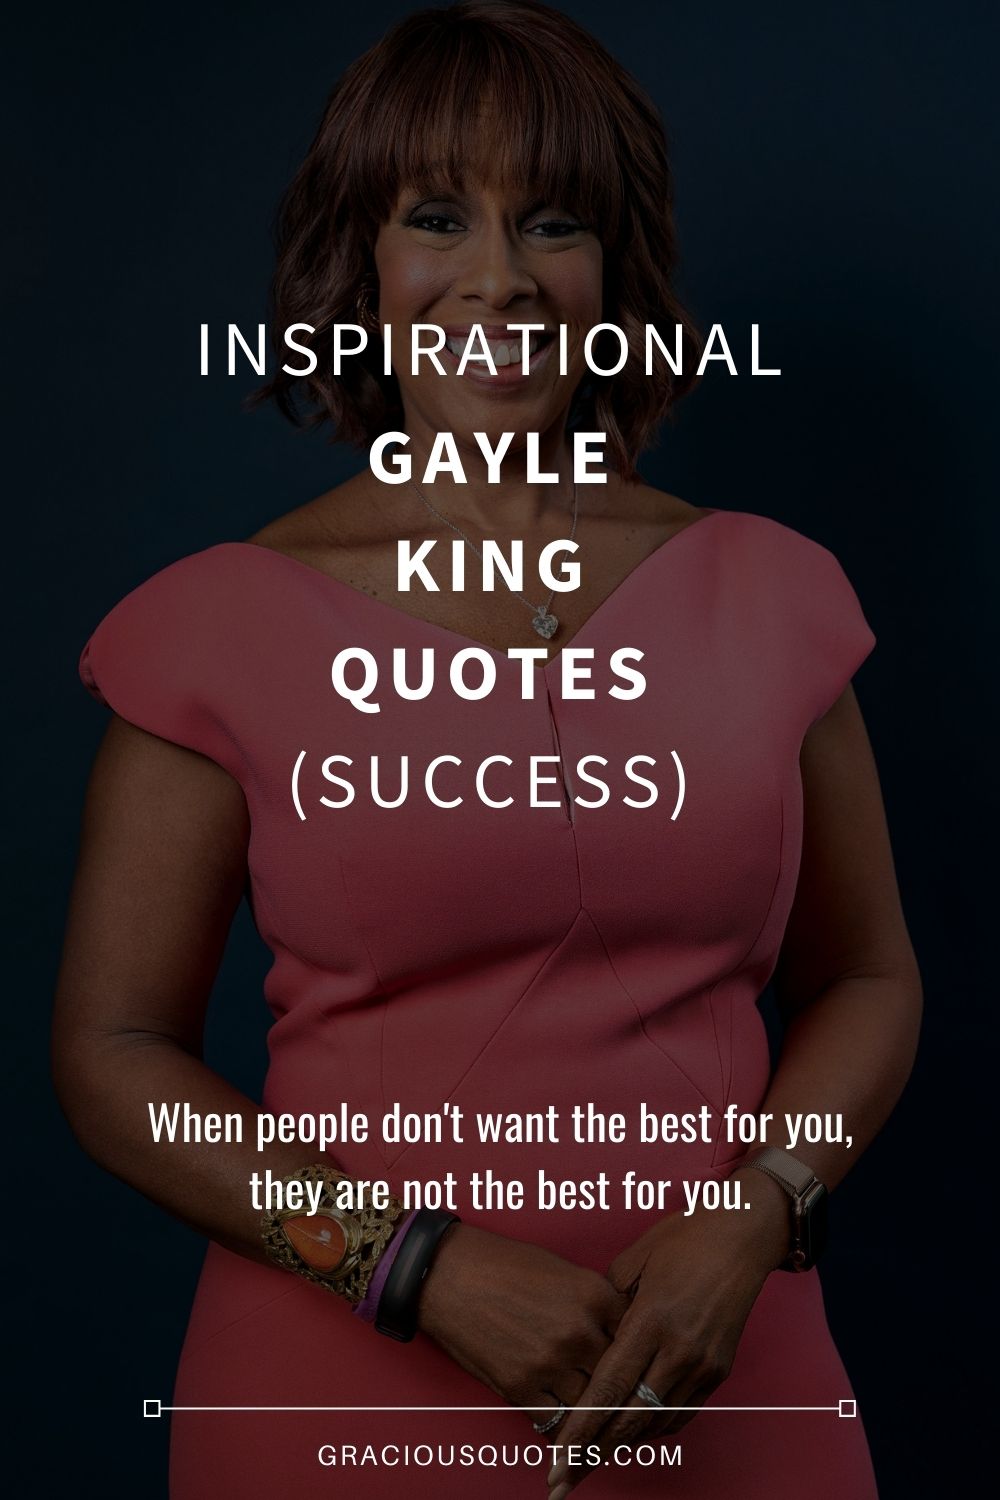 Inspirational Gayle King Quotes (SUCCESS) - Gracious Quotes